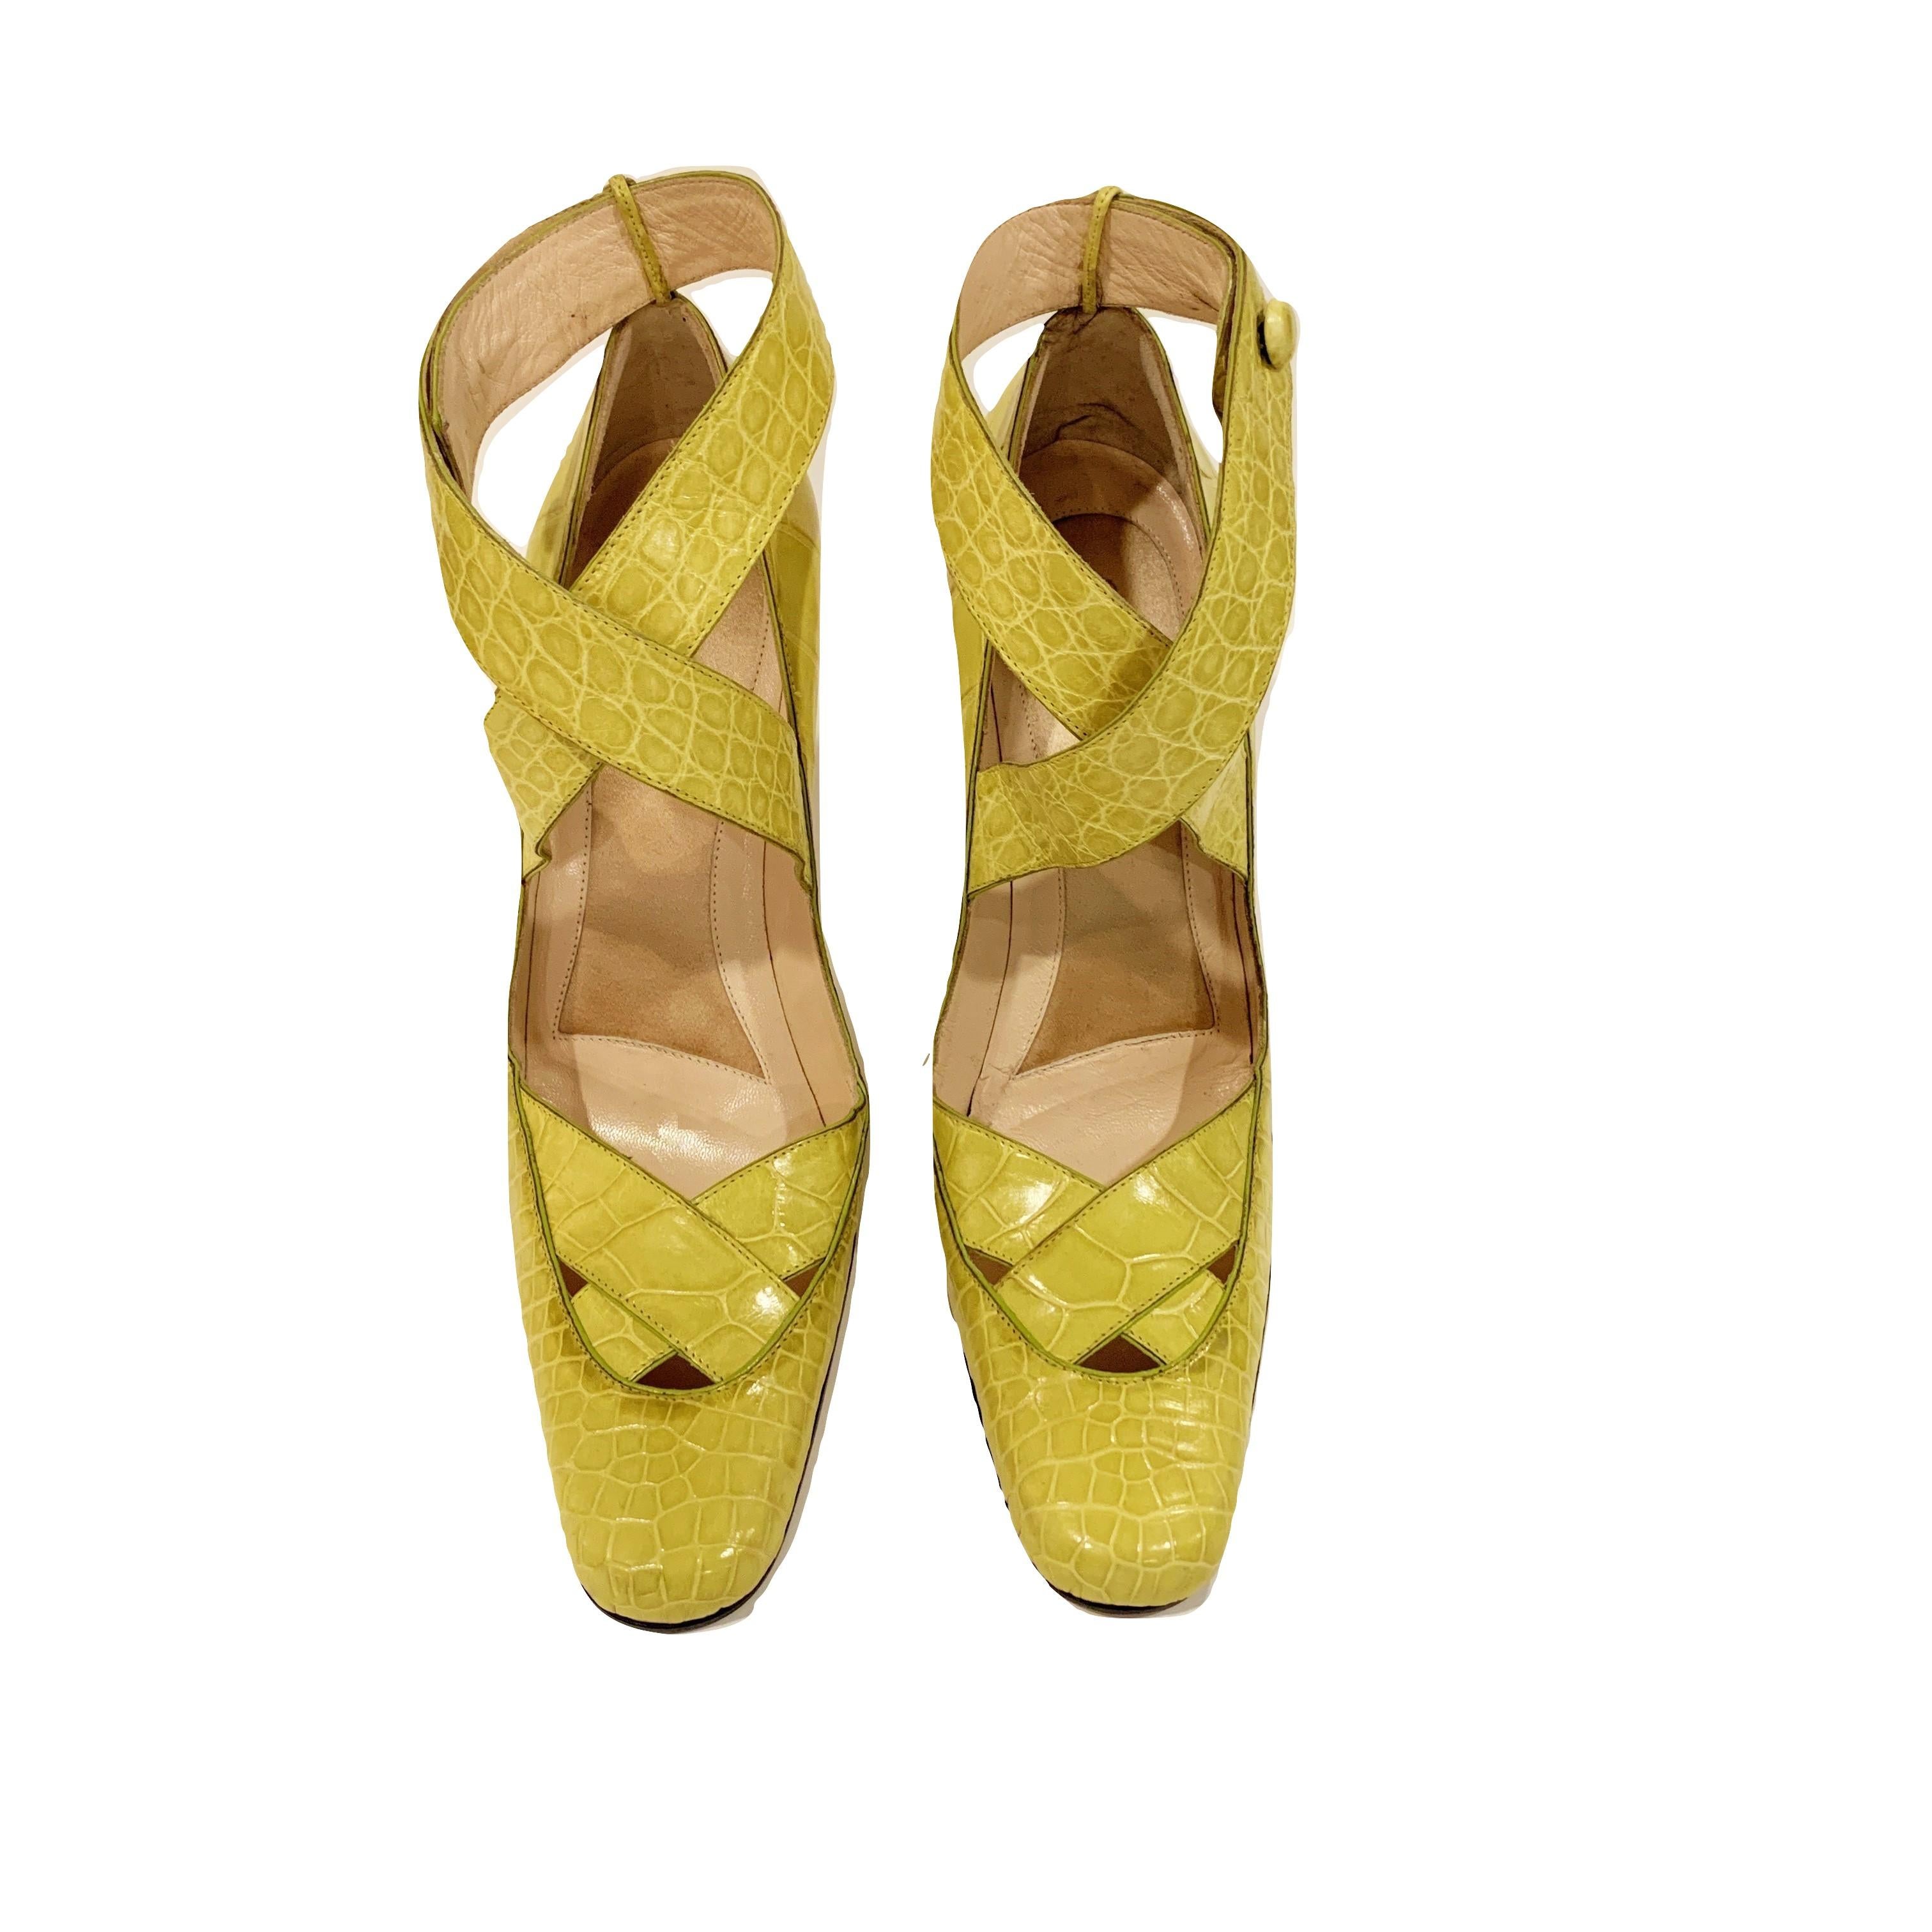 Neu Tom Ford for Gucci Krokodil Ballerina Heels Pumps in Light Chartreuse Sz 39 12